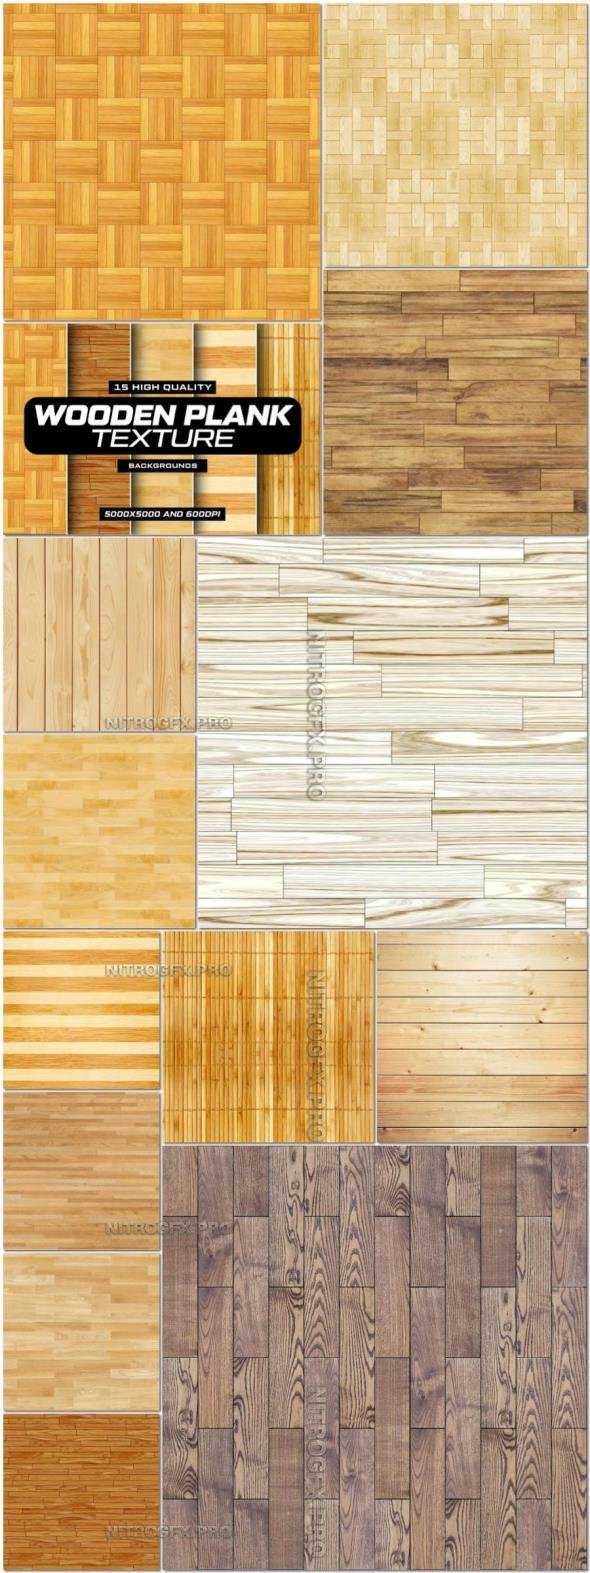 15 Wooden Plank Texture Design